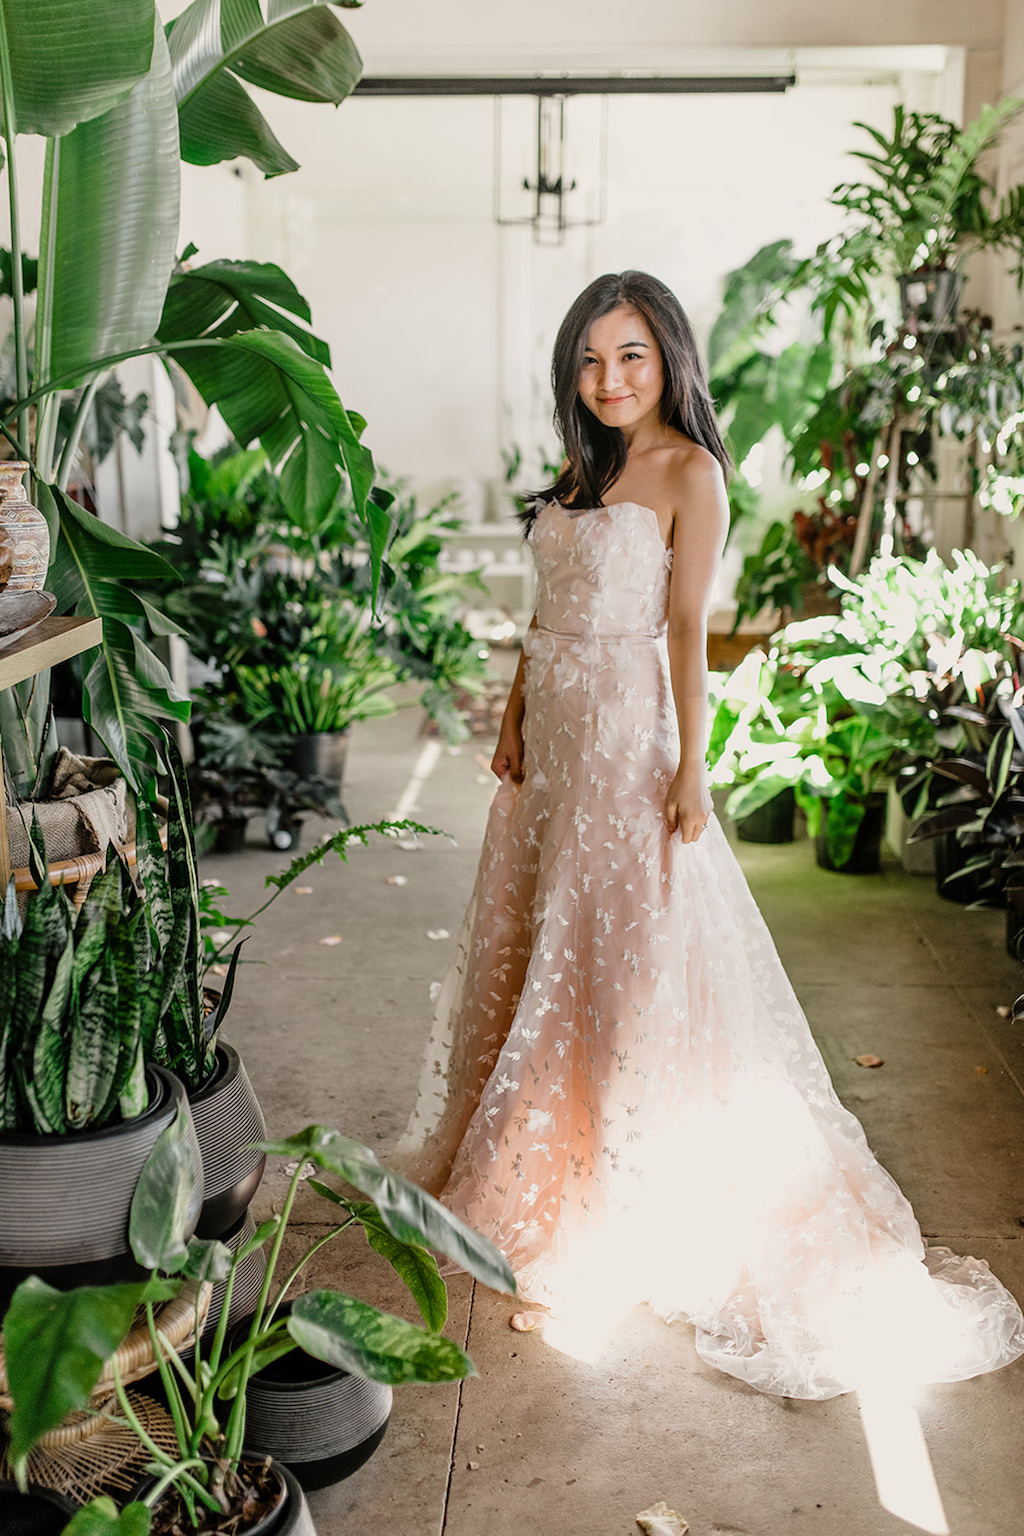 Indoor Bridal Portrait in Strapless Pink Peach Wedding Dress | Tampa Intimate Wedding Venue Fancy Free Nursery